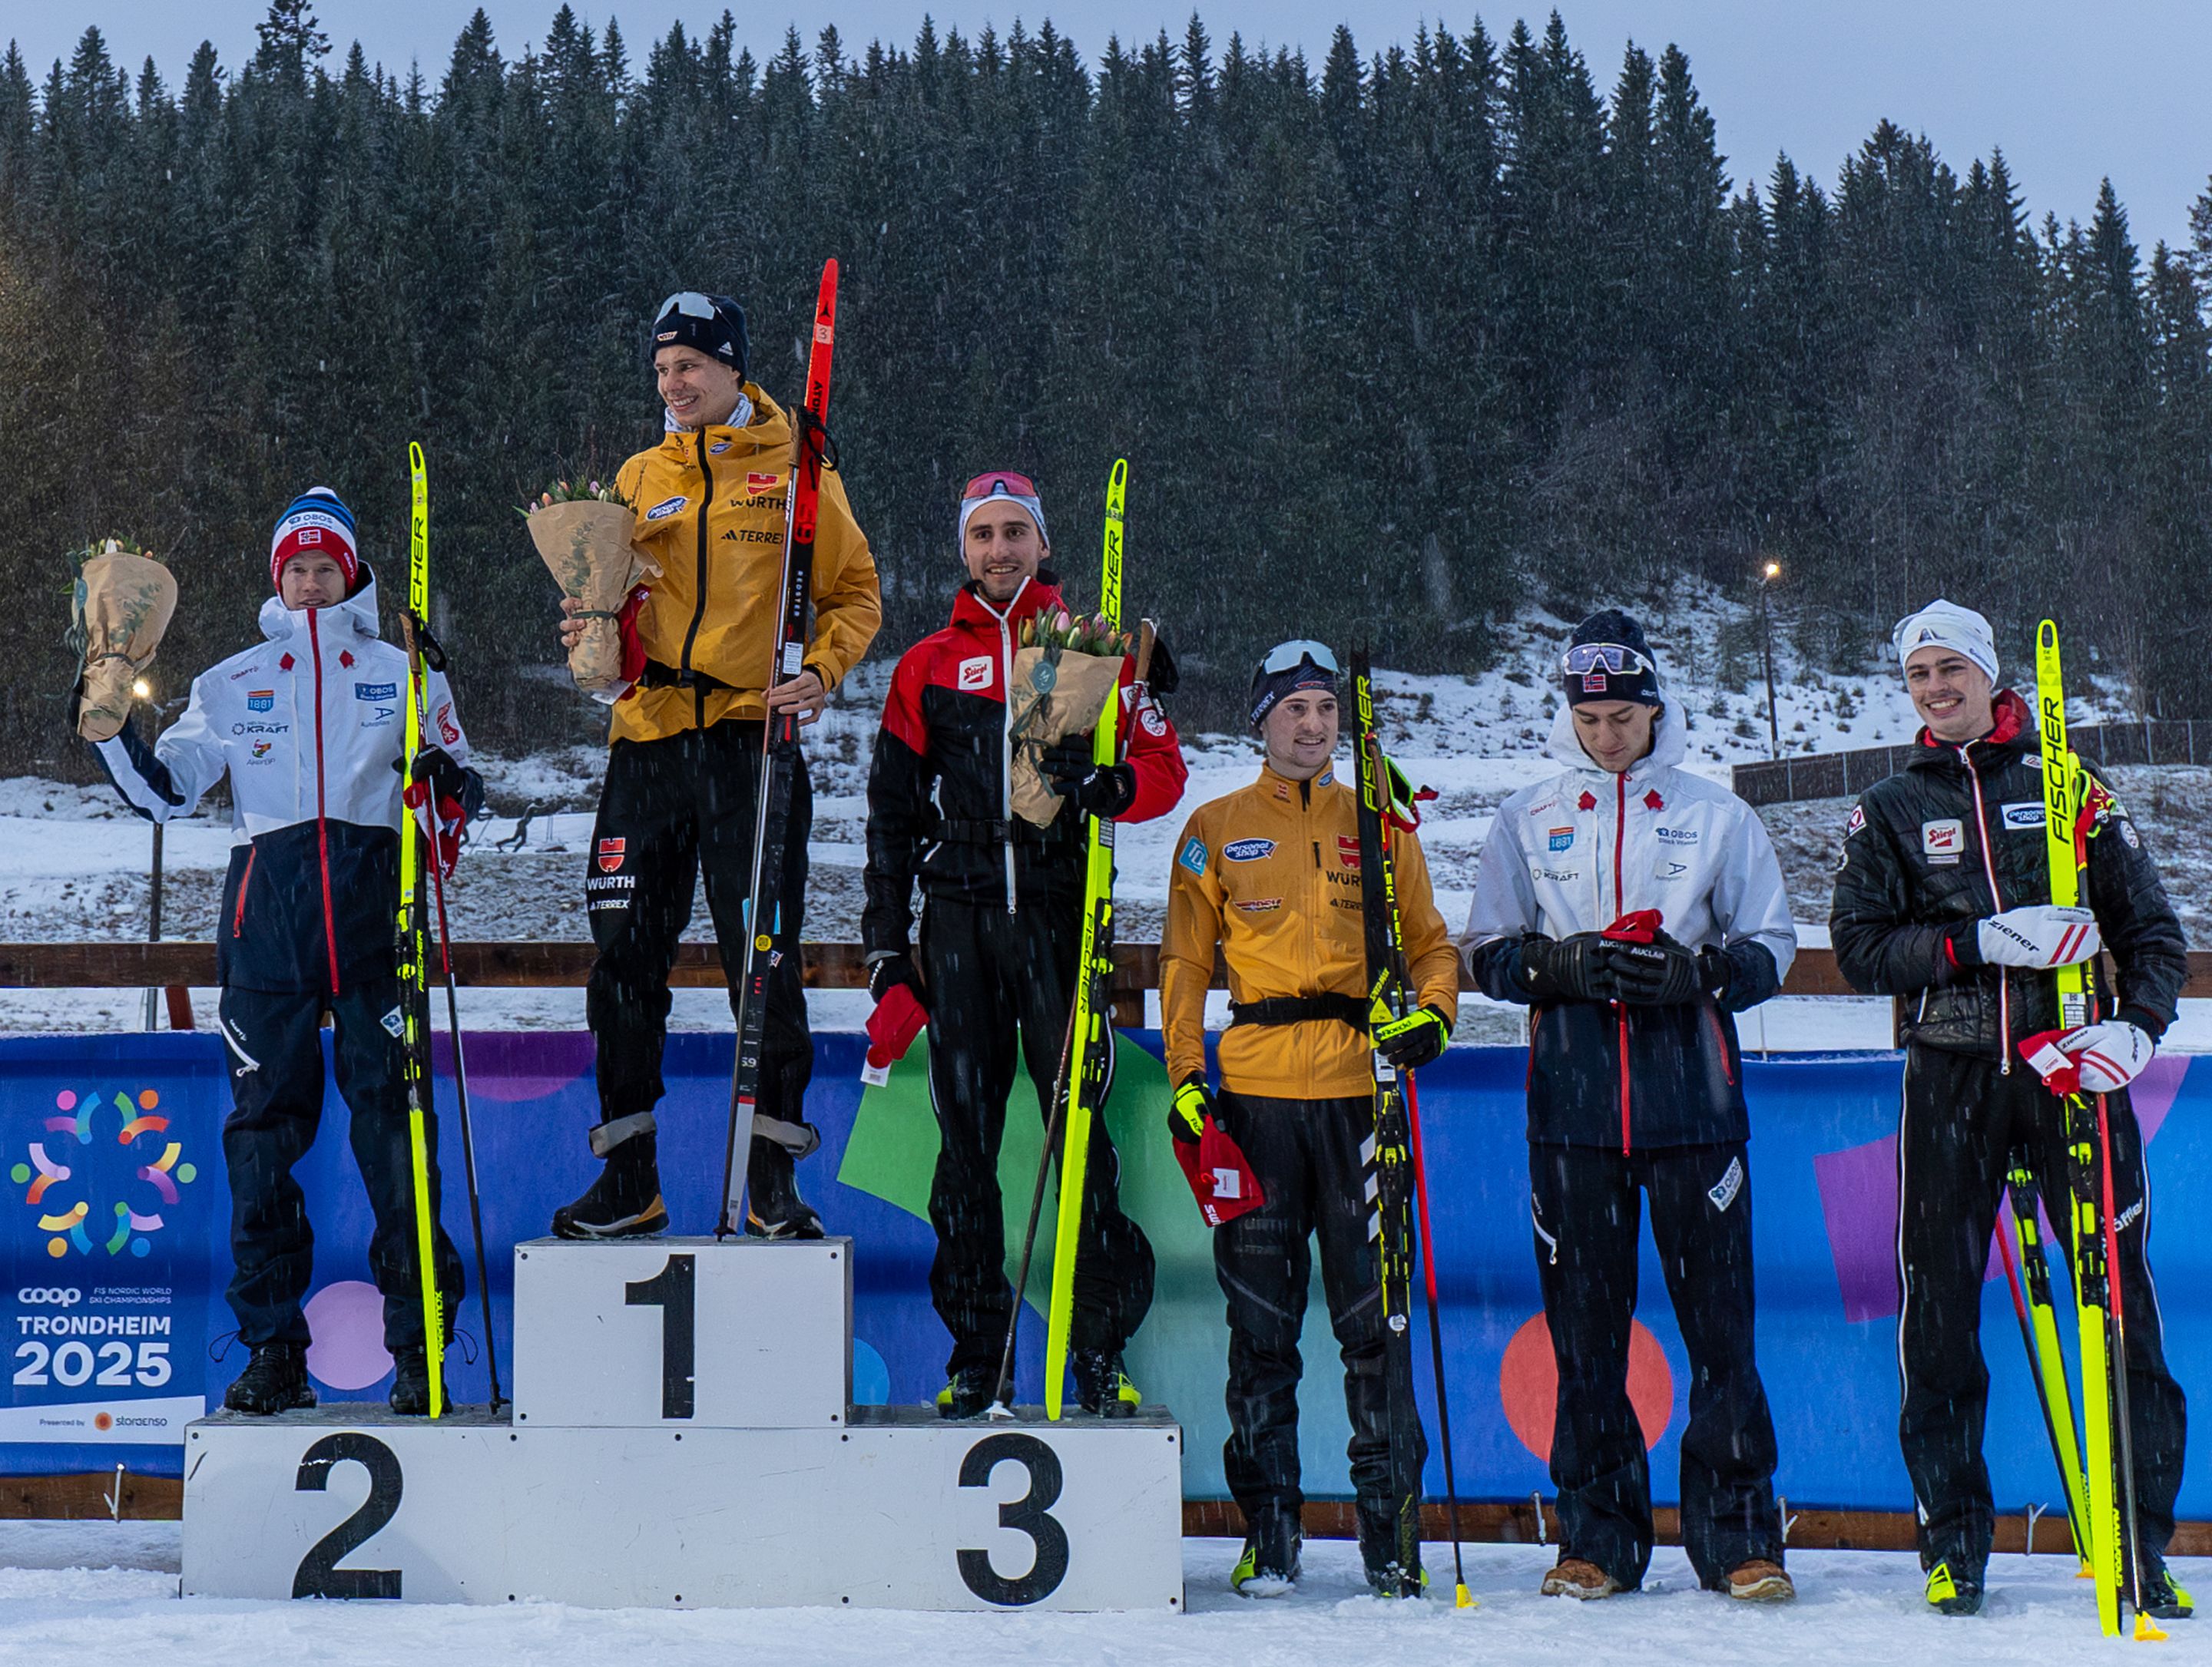 Simon Mach won his first COC on Saturday (c) Norges Skiforbundet